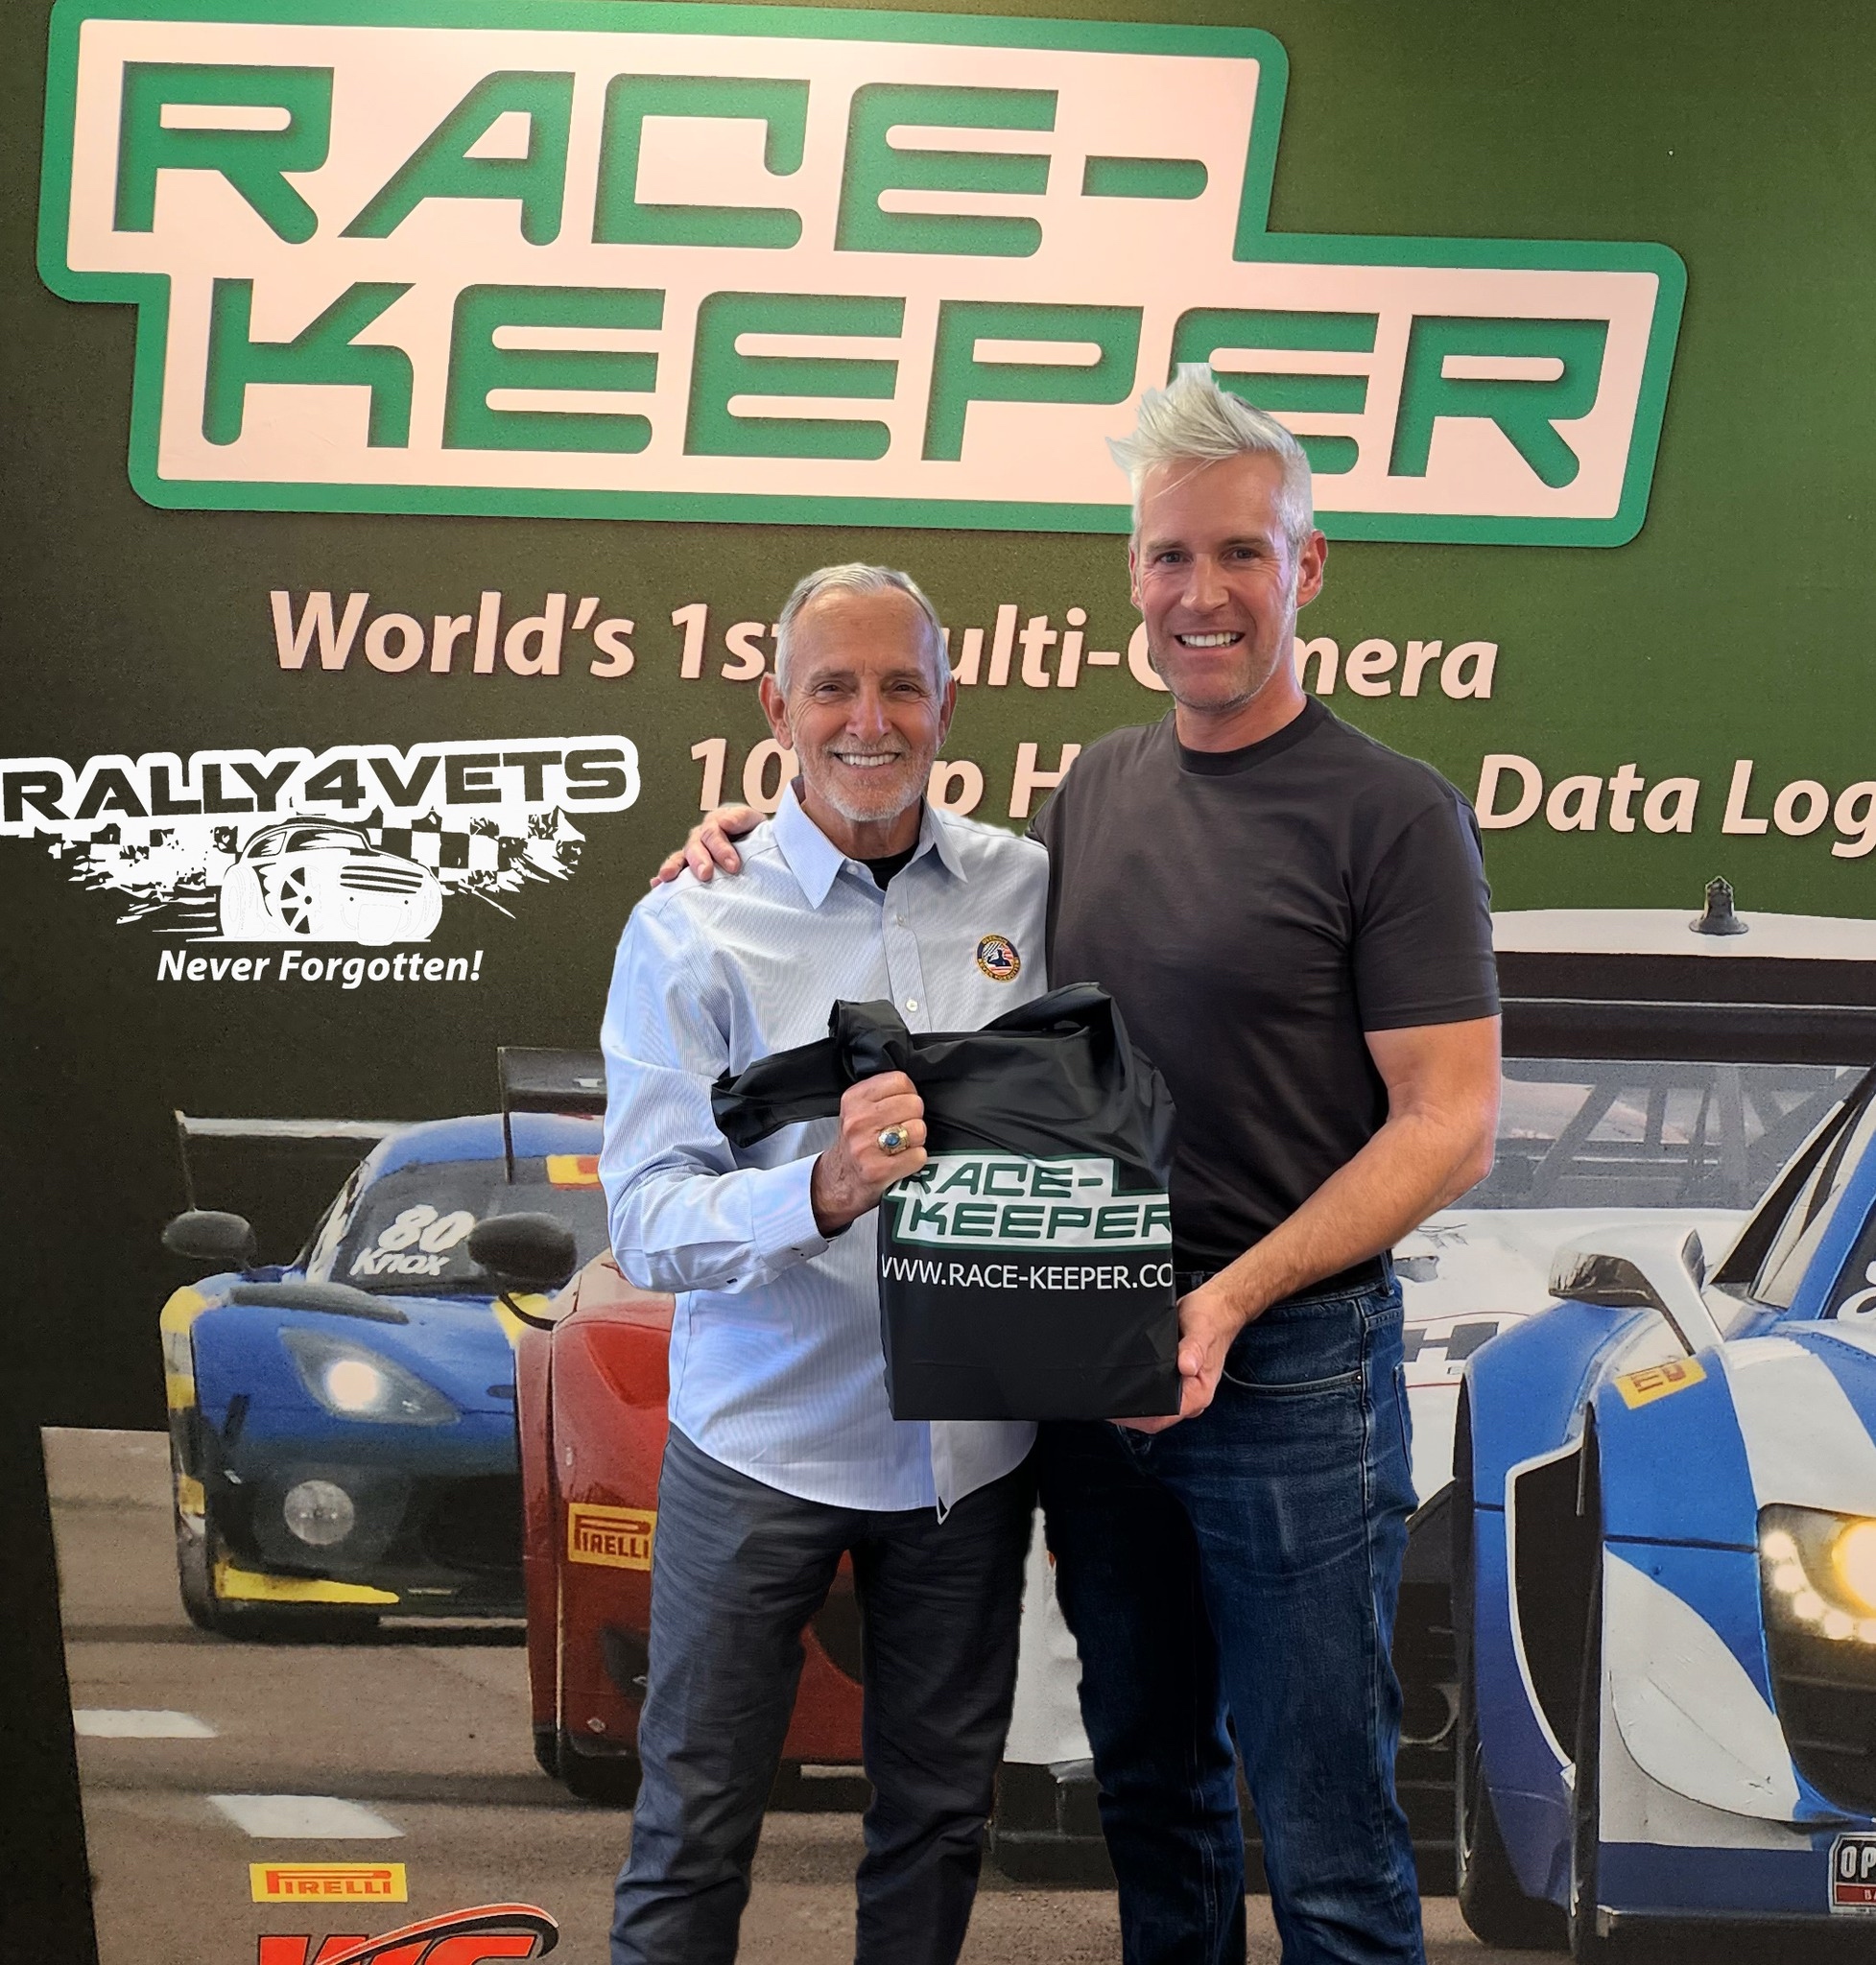 Rally4Vets CEO Robert Hess and Road-Keeper CEO Angus MacKenzie